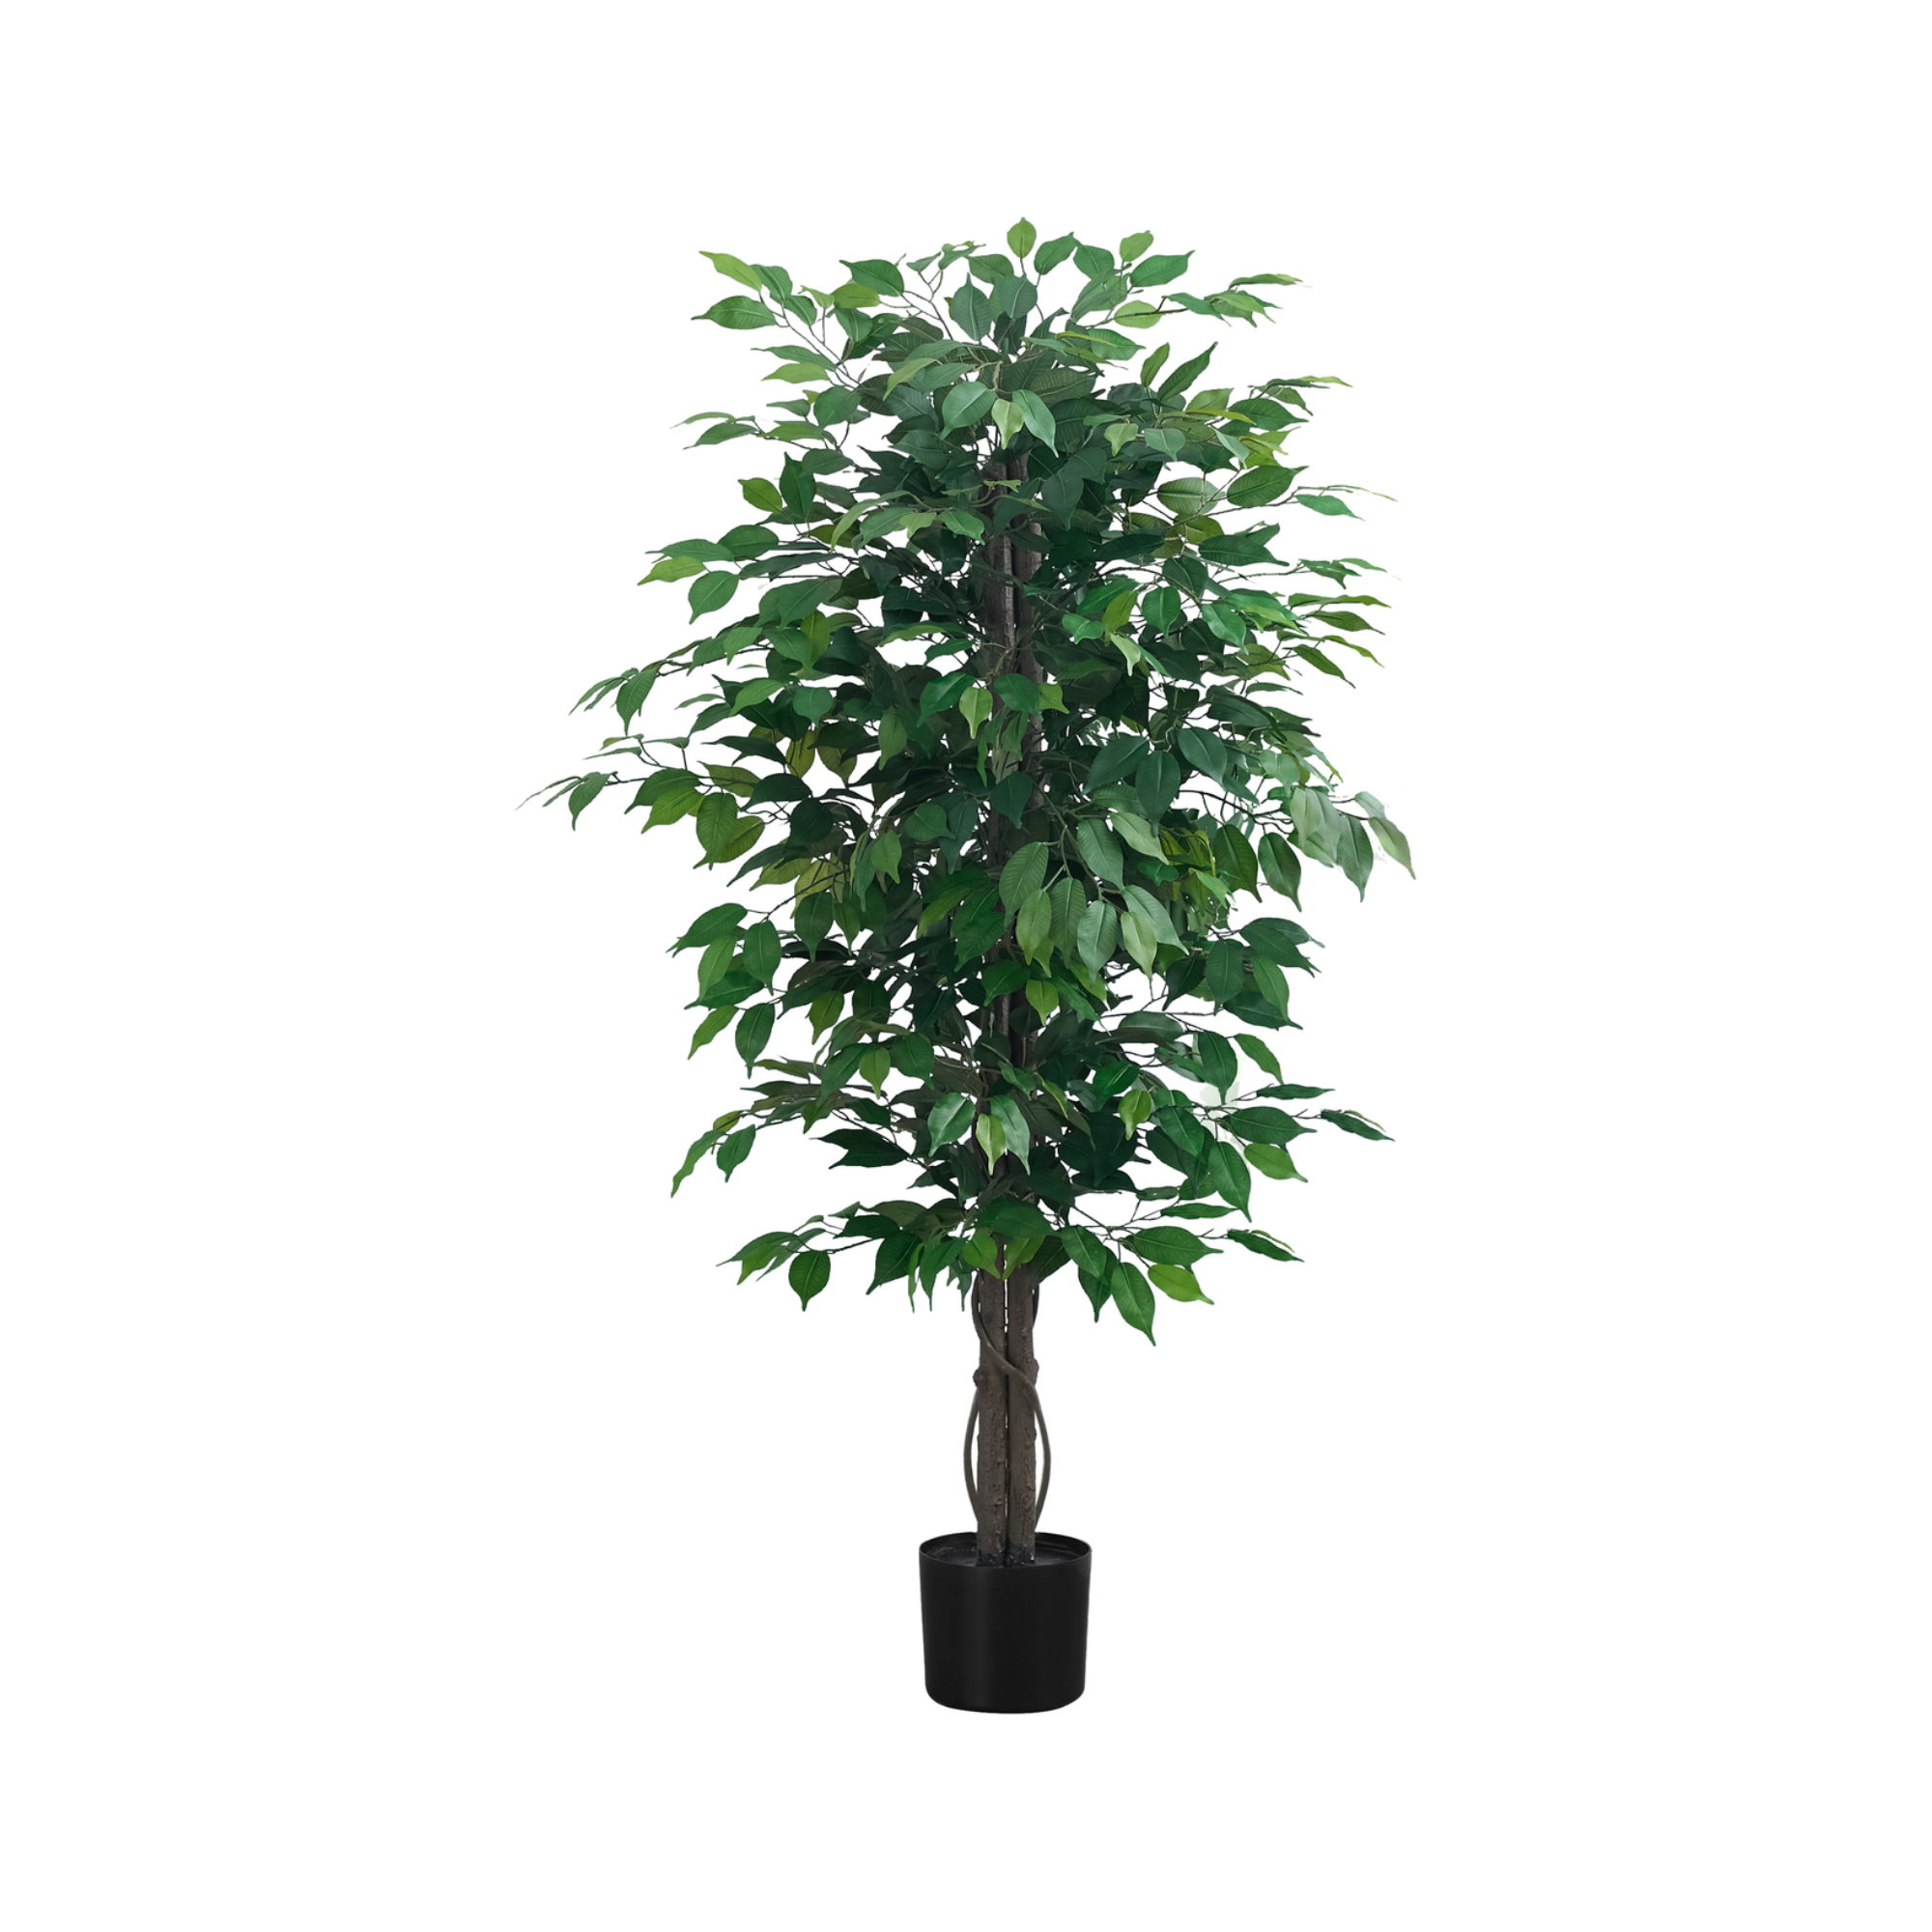 ARTIFICIAL PLANT - 58"H / INDOOR FICUS TREE IN A 6" POT